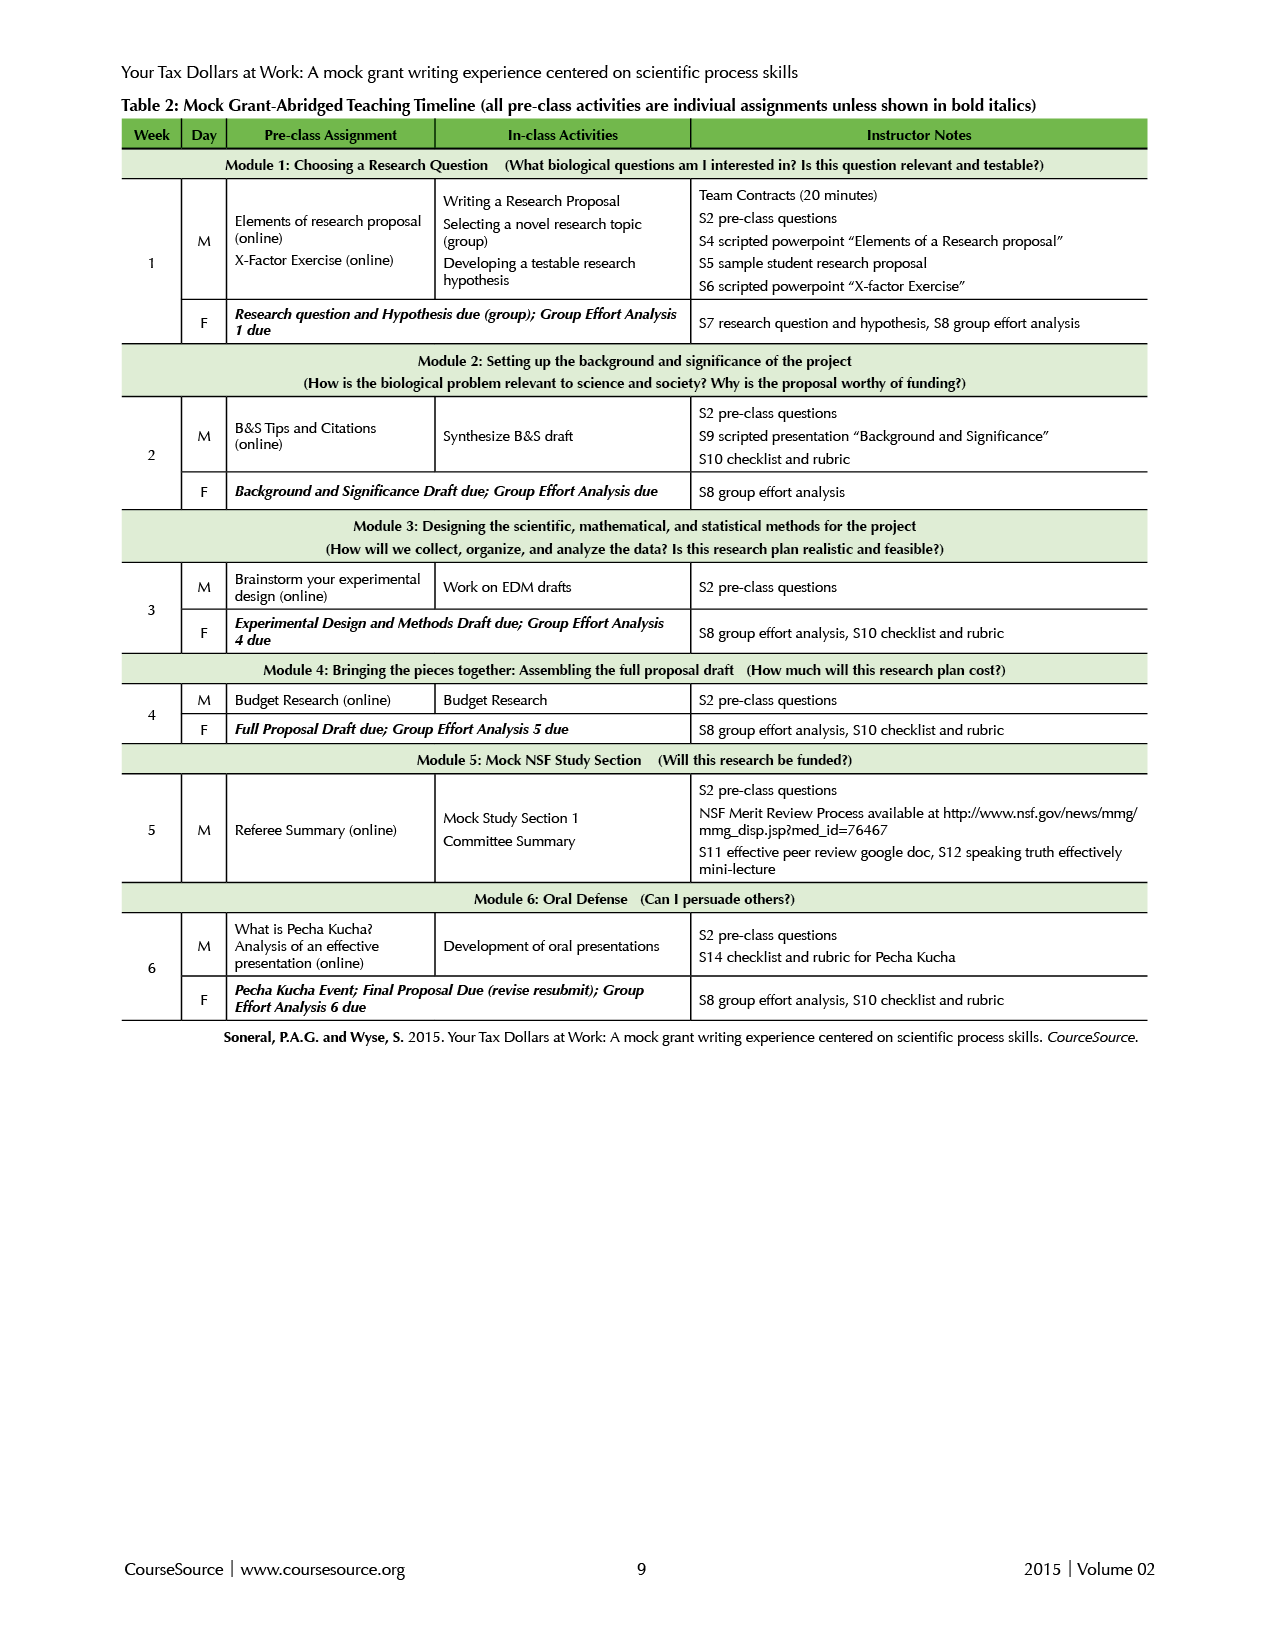 Table 2. Mock Grant-Abridged Teaching Timeline